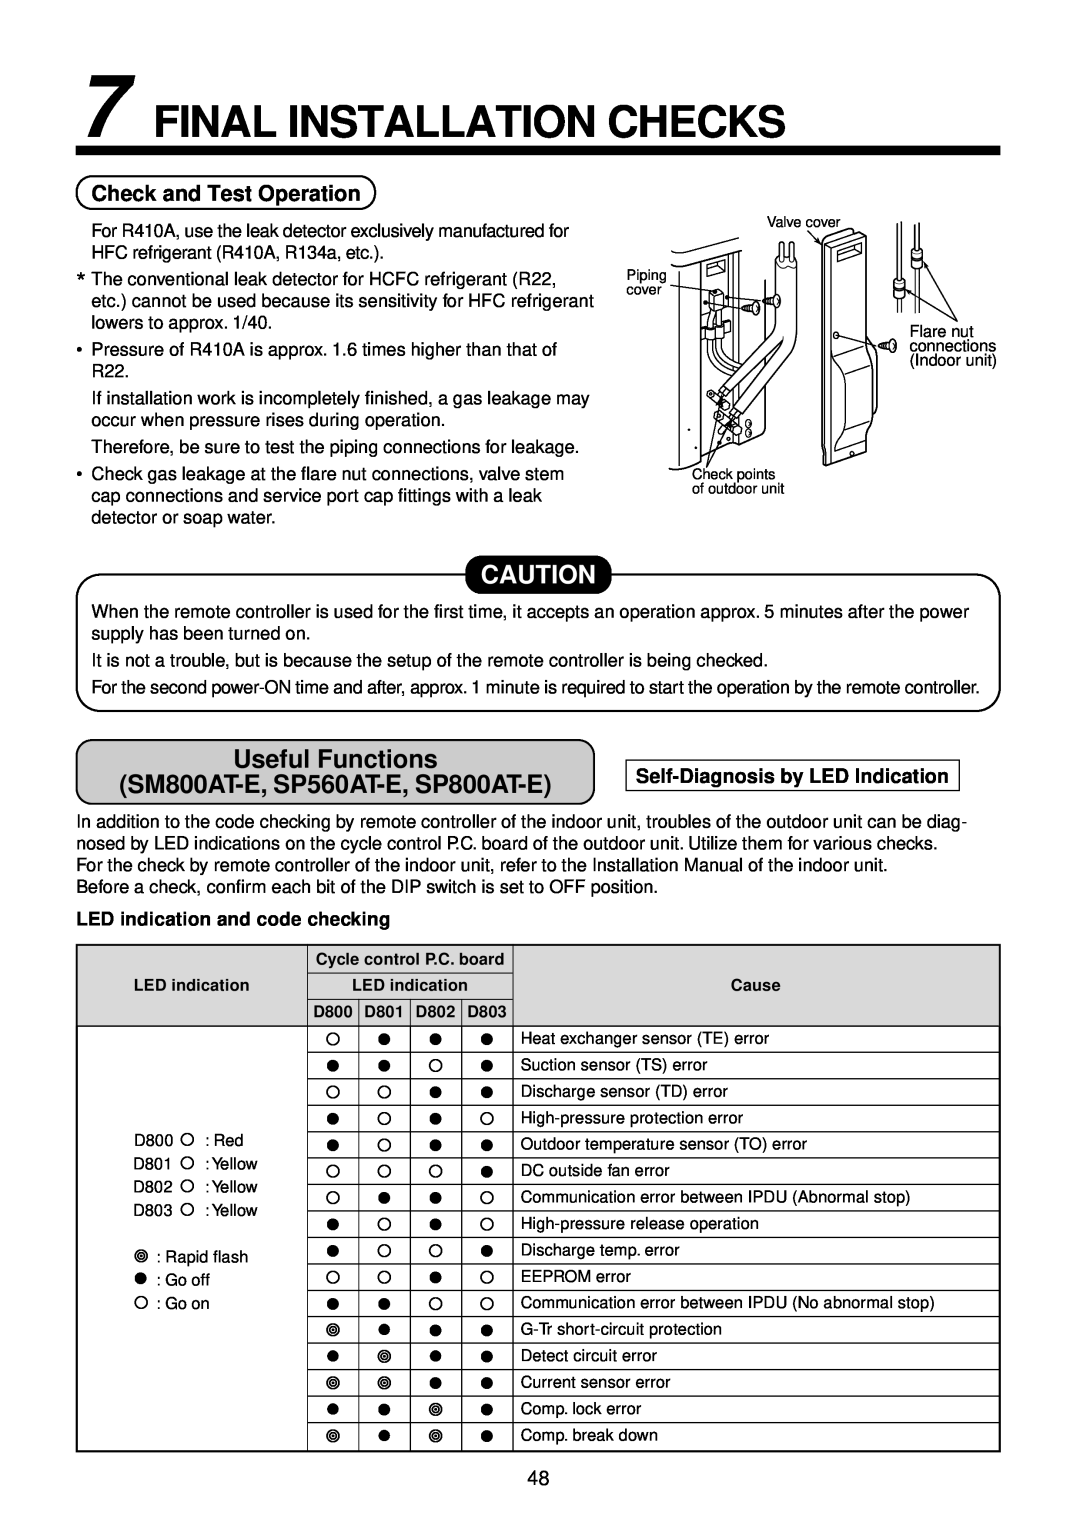 Toshiba RAV-SP1400UT-E, RAV-SP560AT-E Final Installation Checks, Useful Functions SM800AT-E, SP560AT-E, SP800AT-E 